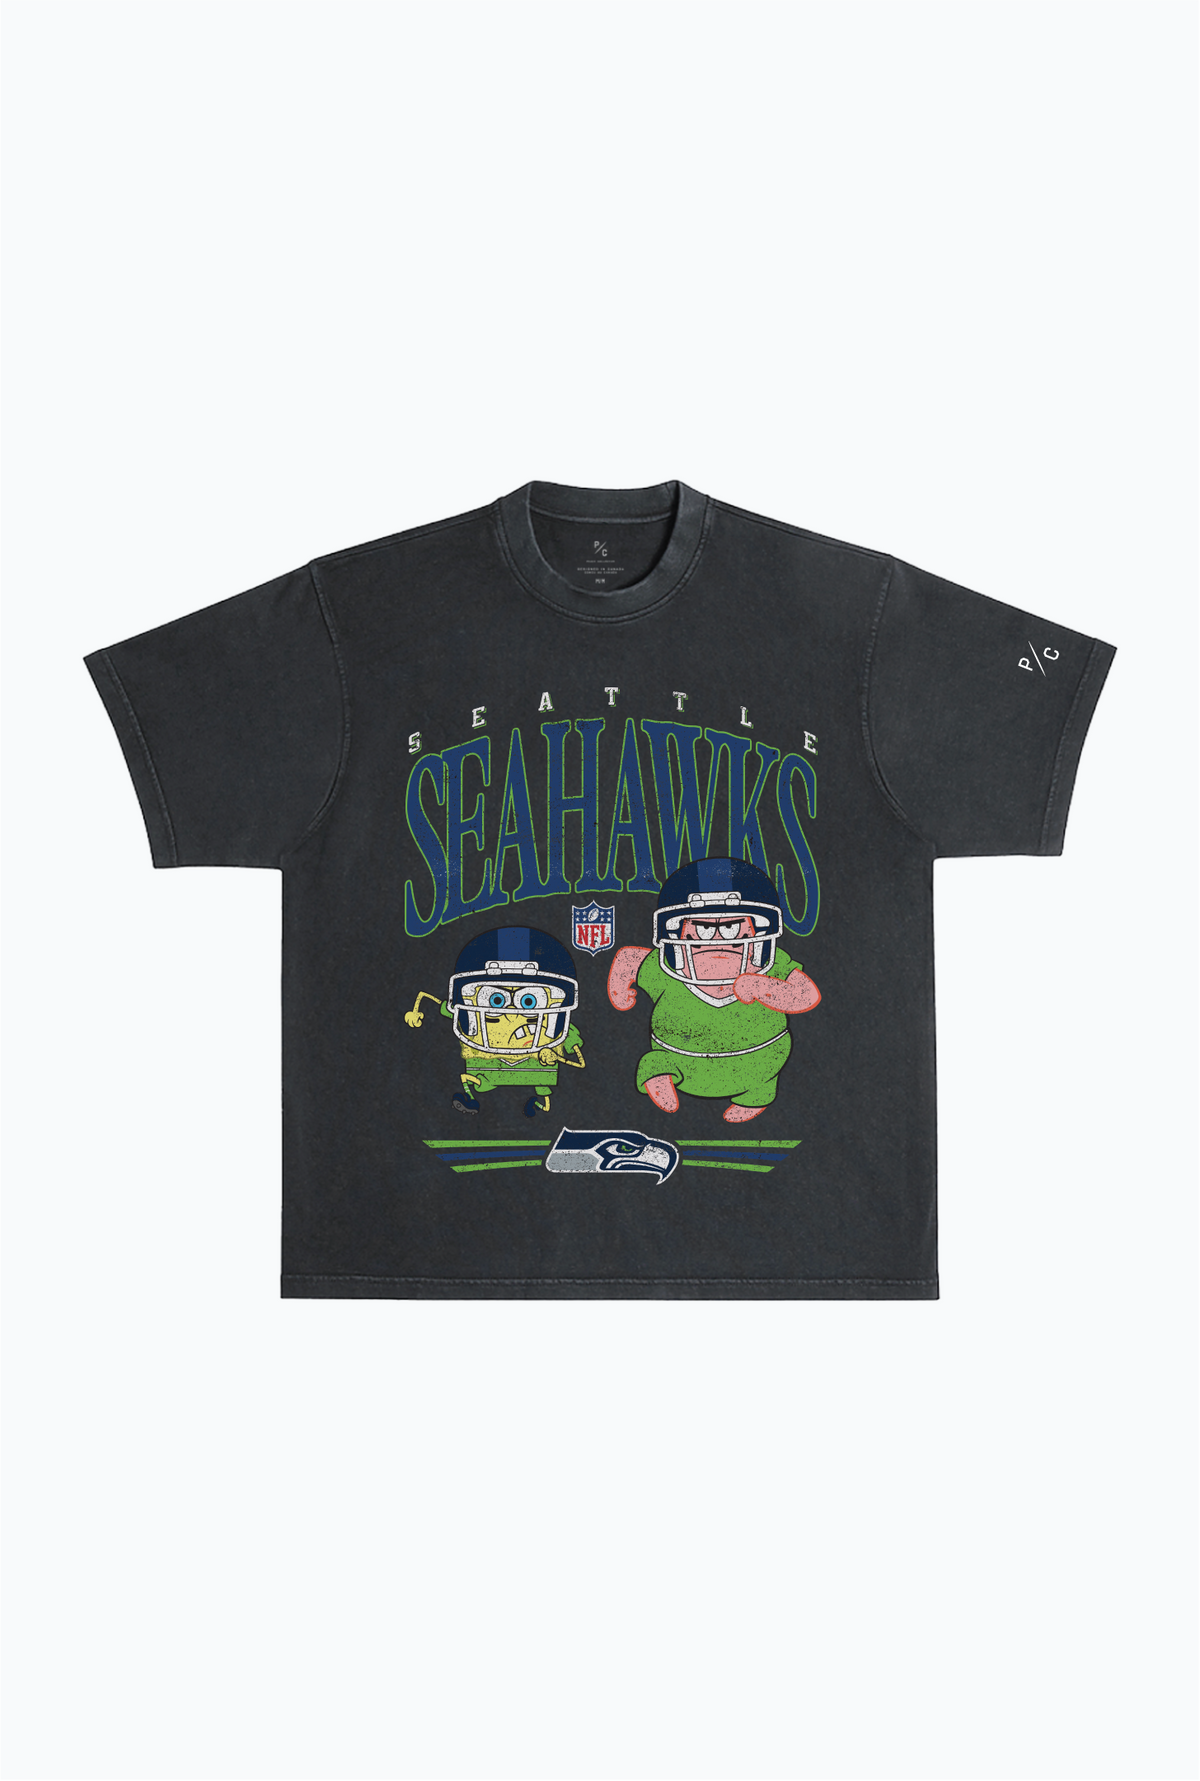 Spongebob & Patrick Rush Heavy Pigment Dye T-Shirt - Seattle Seahawks